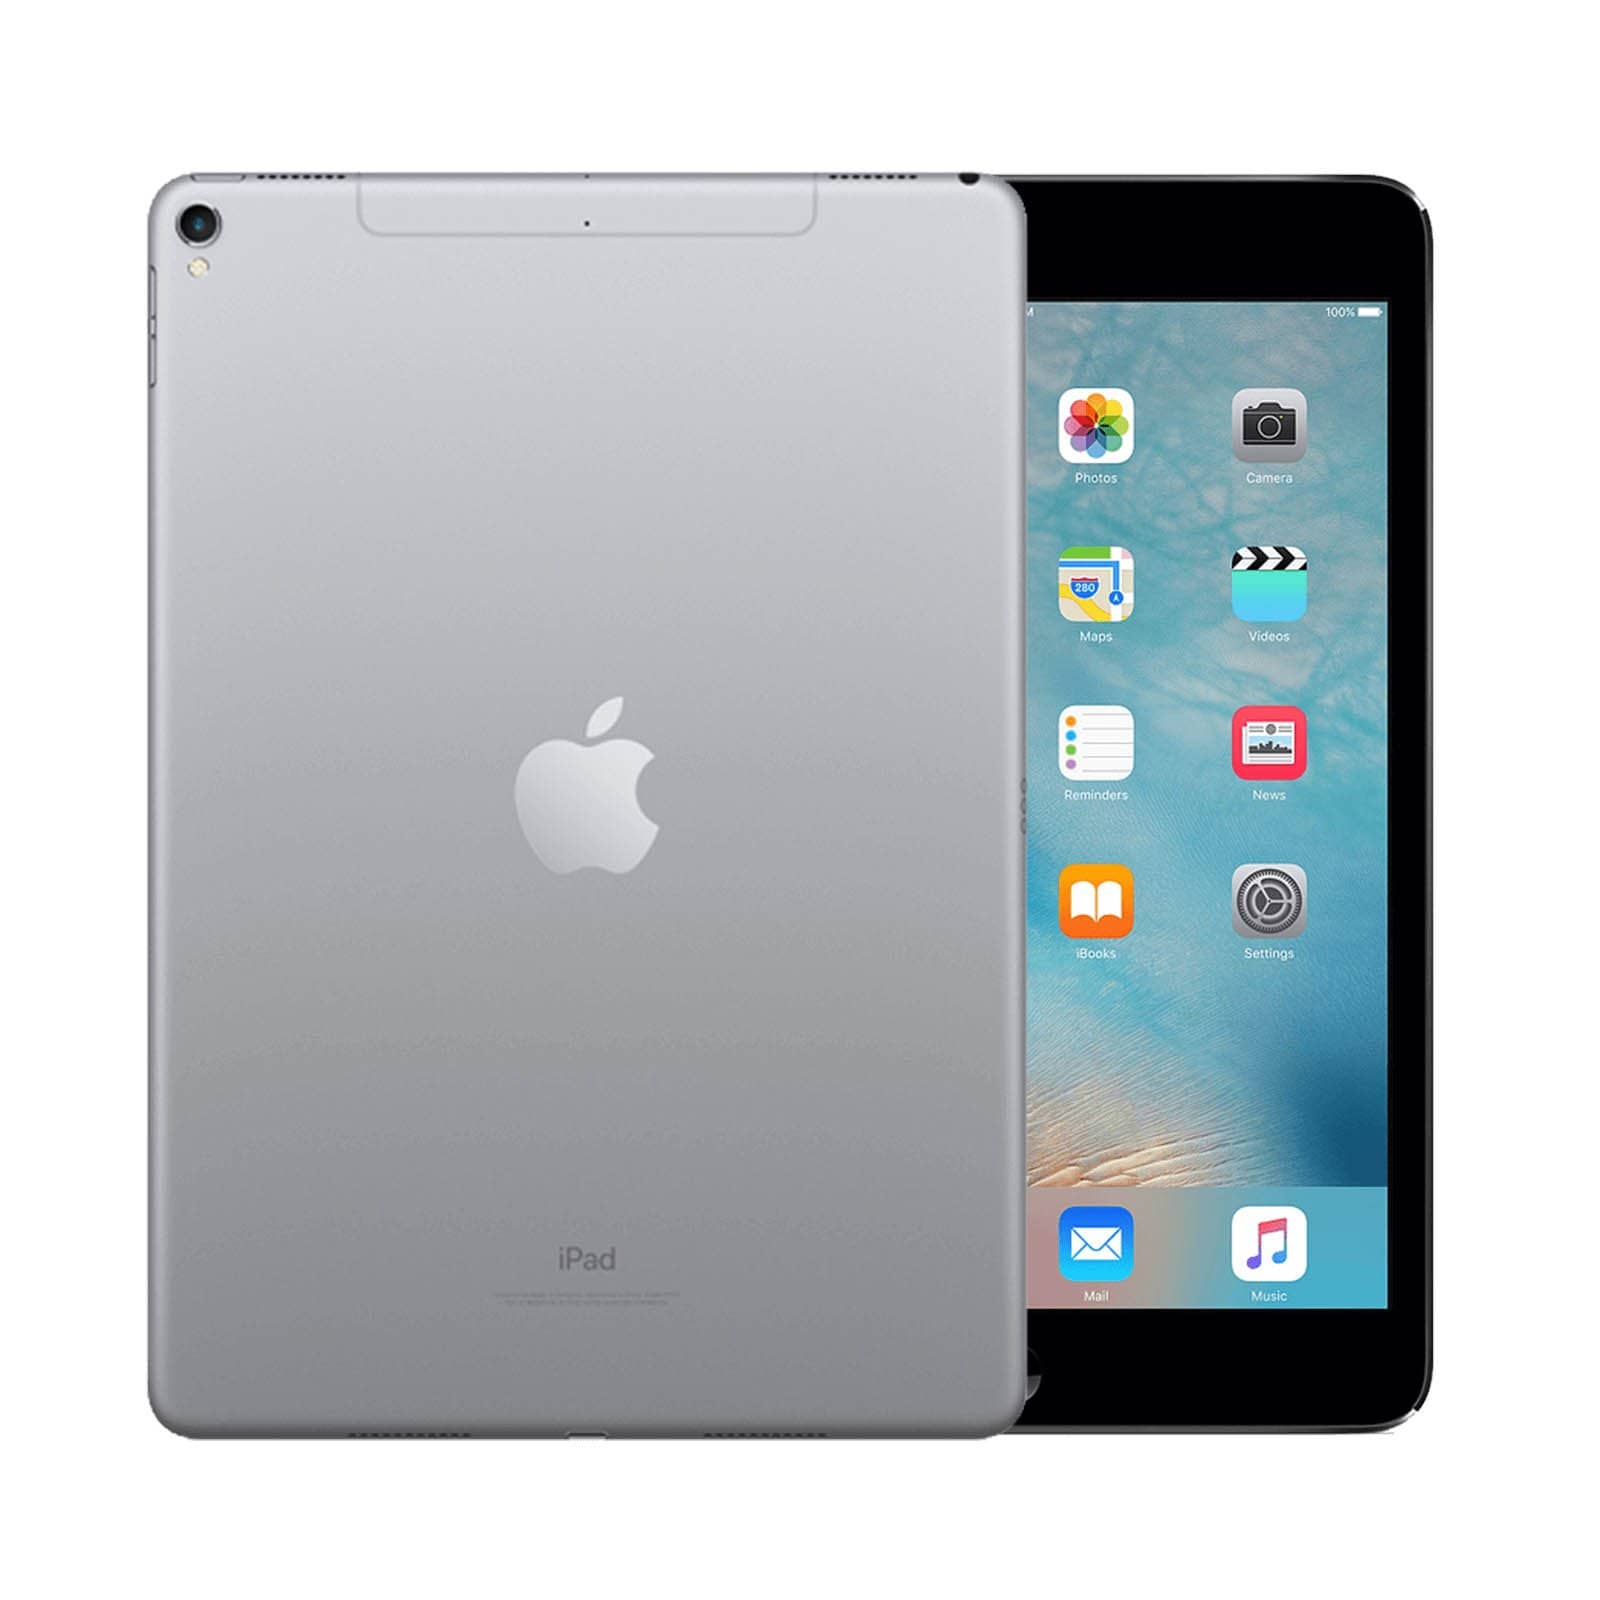 iPad Pro 9.7 Inch 256GB Space Grey Good - Unlocked 256GB Space Grey Good